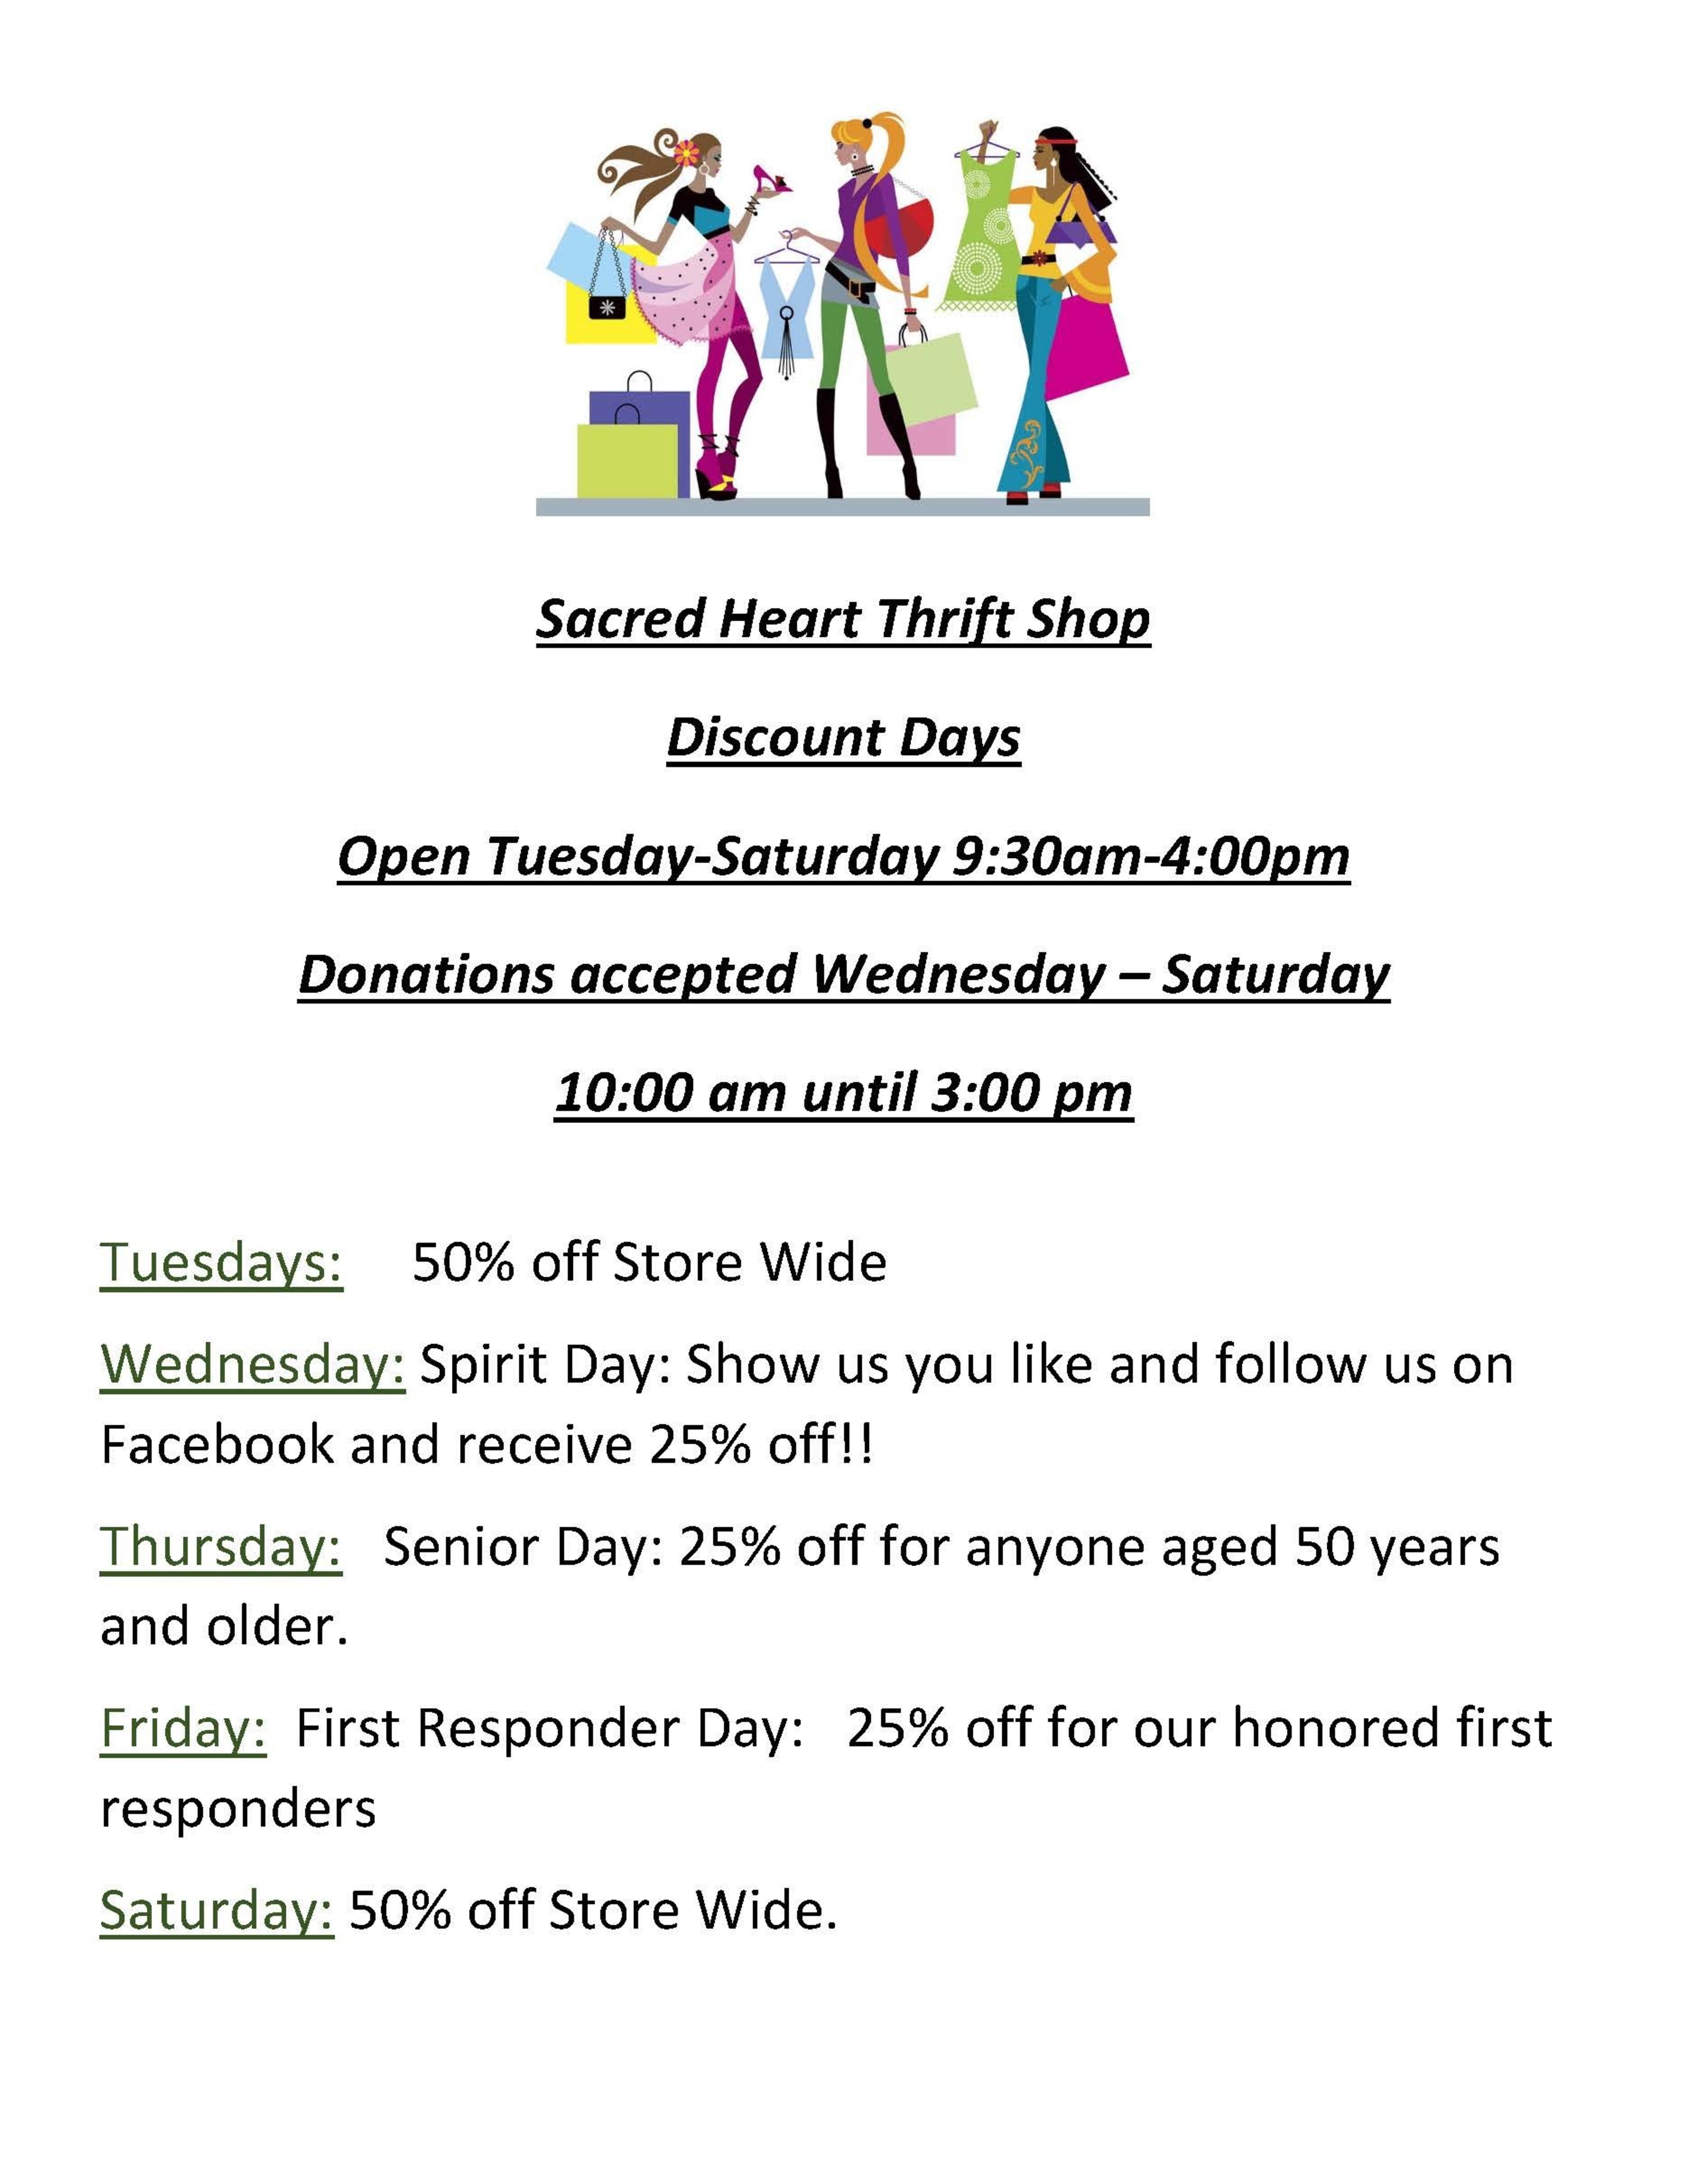 Sacred Heart Thrift Shop Hours